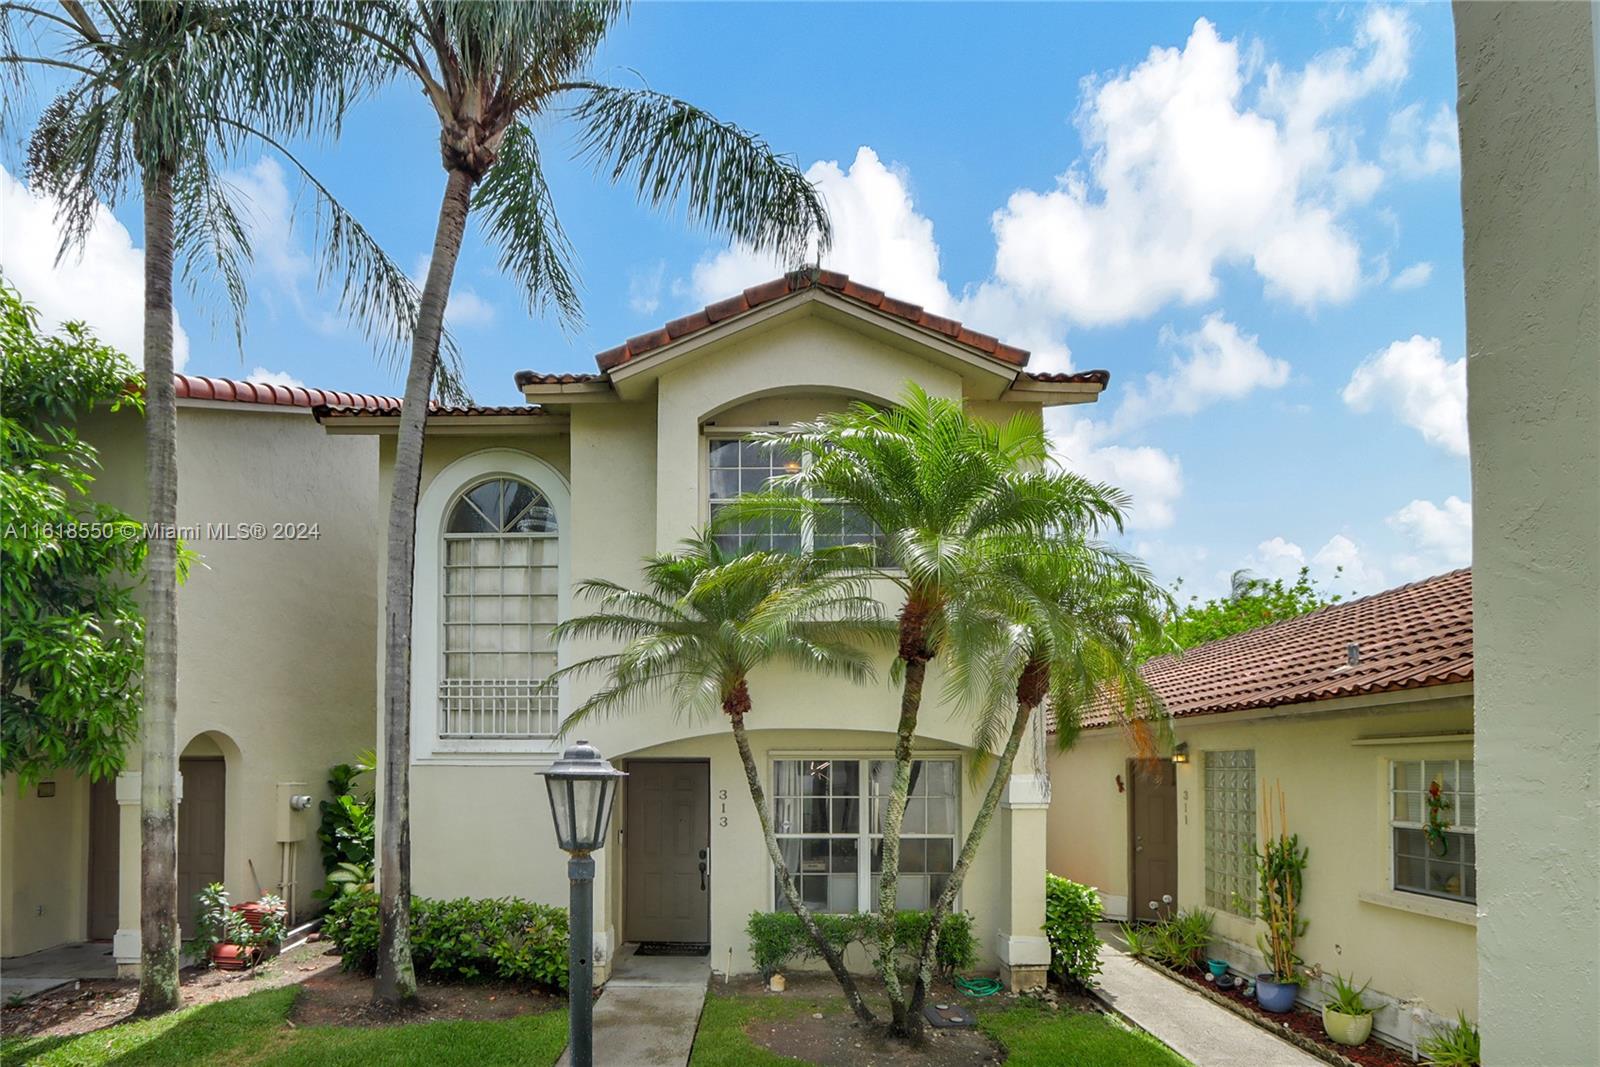 Rental Property at 313 Nw 109th Ave 313, Pembroke Pines, Miami-Dade County, Florida - Bedrooms: 3 
Bathrooms: 3  - $3,150 MO.